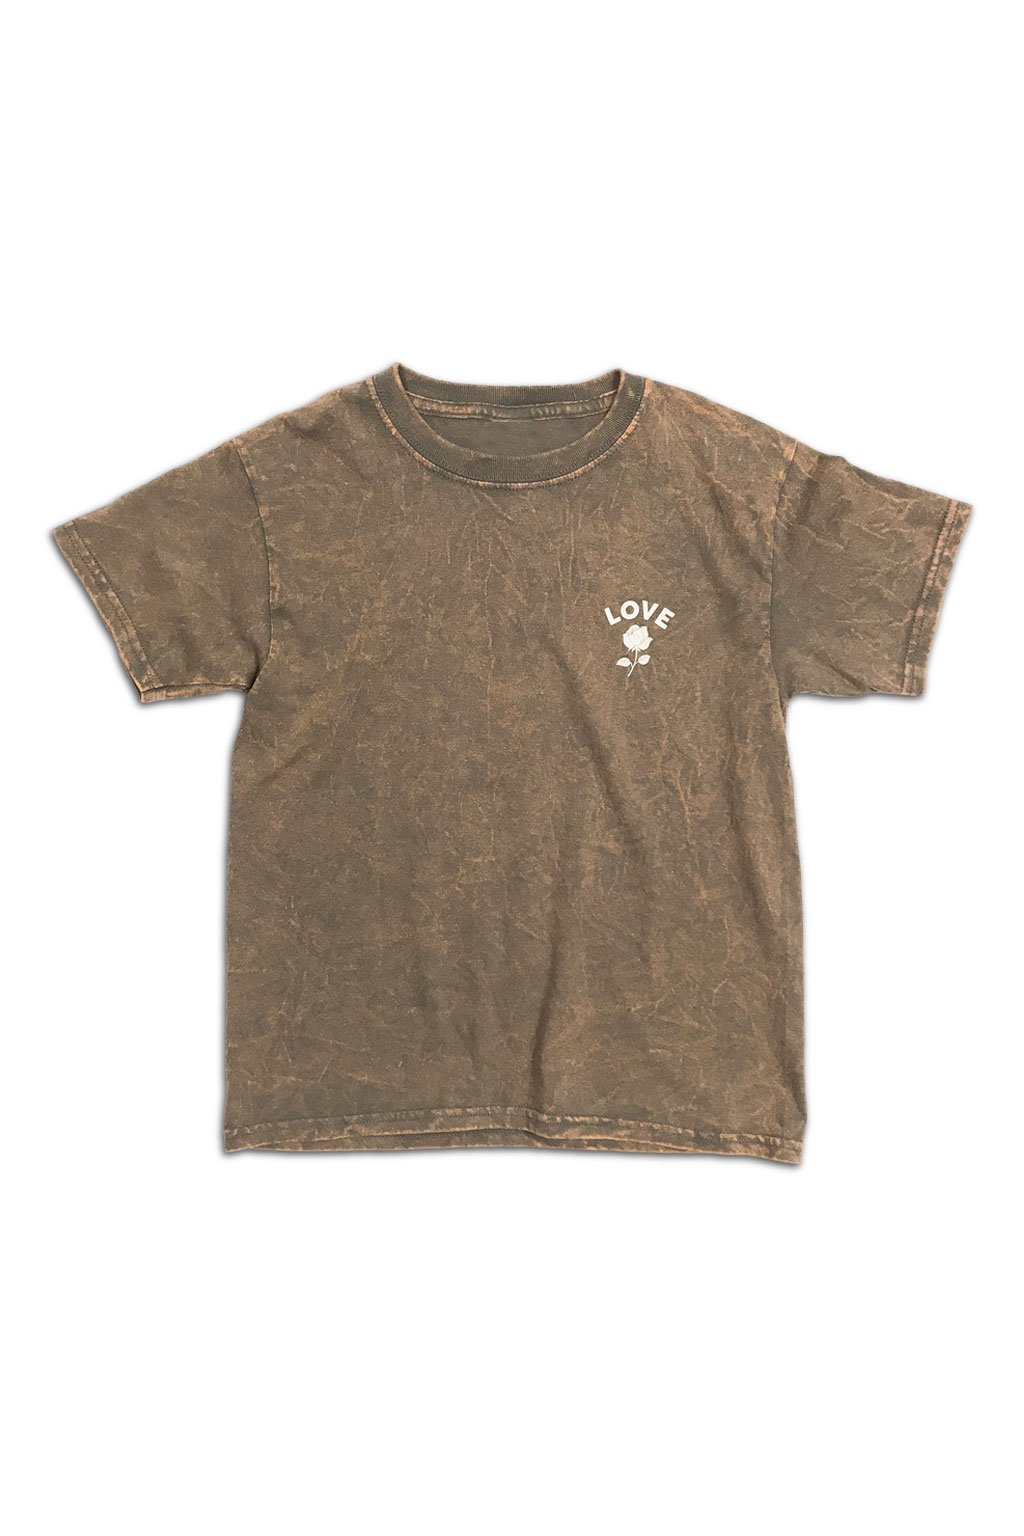 Vintage Charcoal Grey Love T-Shirt - Port 213.com 